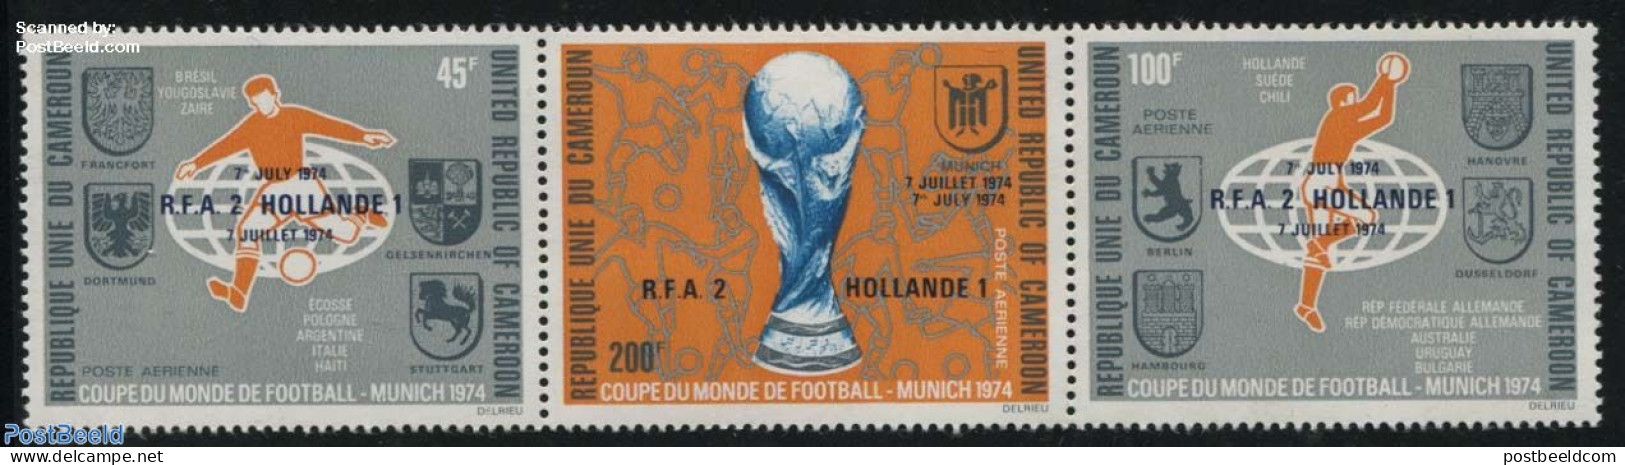 Cameroon 1974 Football Winners 3v [::], Mint NH, History - Sport - Netherlands & Dutch - Football - Géographie